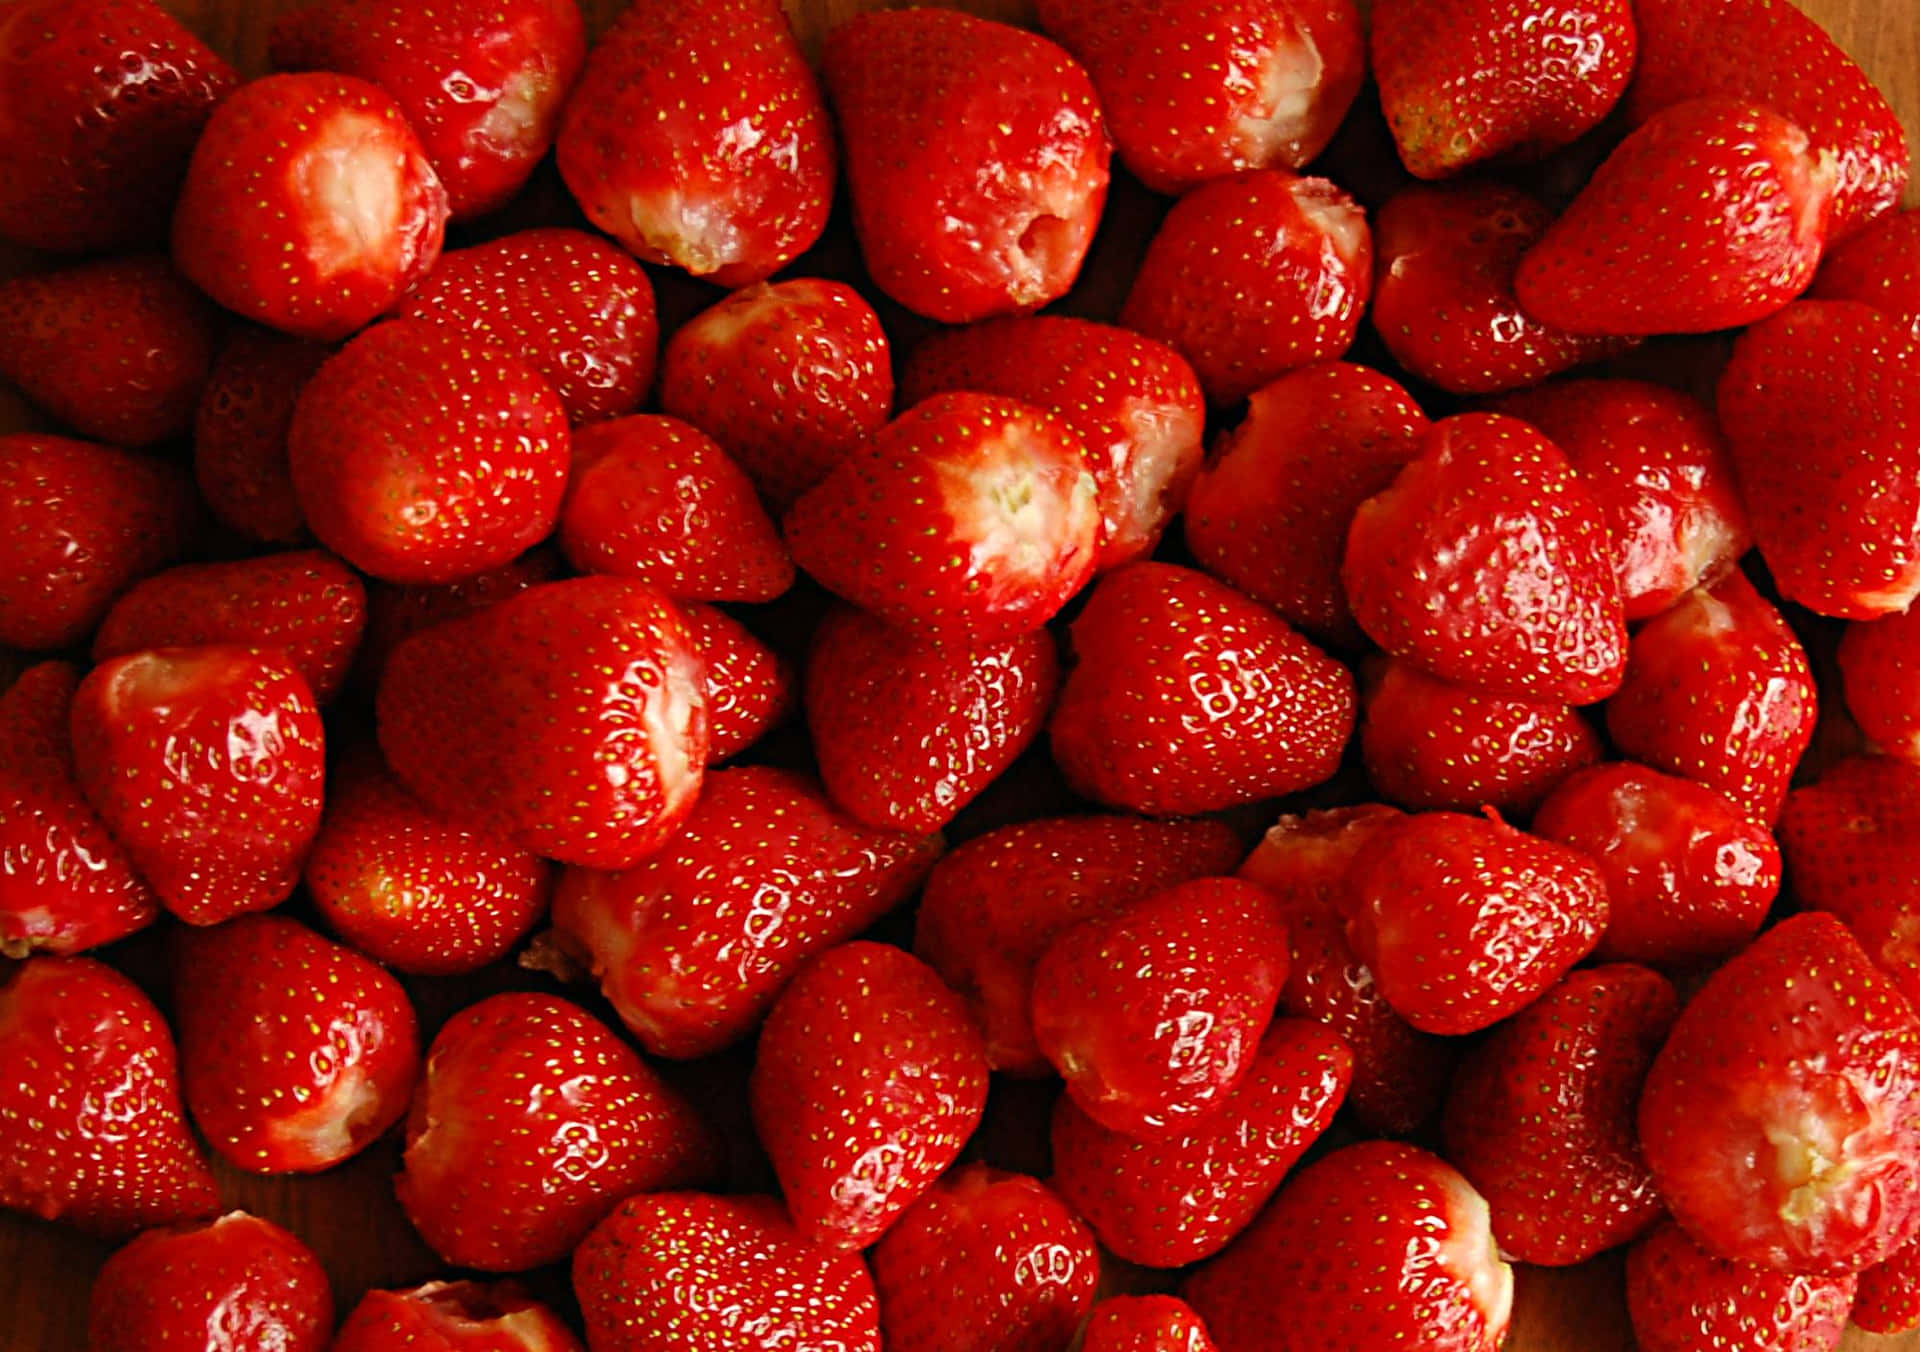 Pick Your Own Ripe Strawberries at the U-Pick Farm